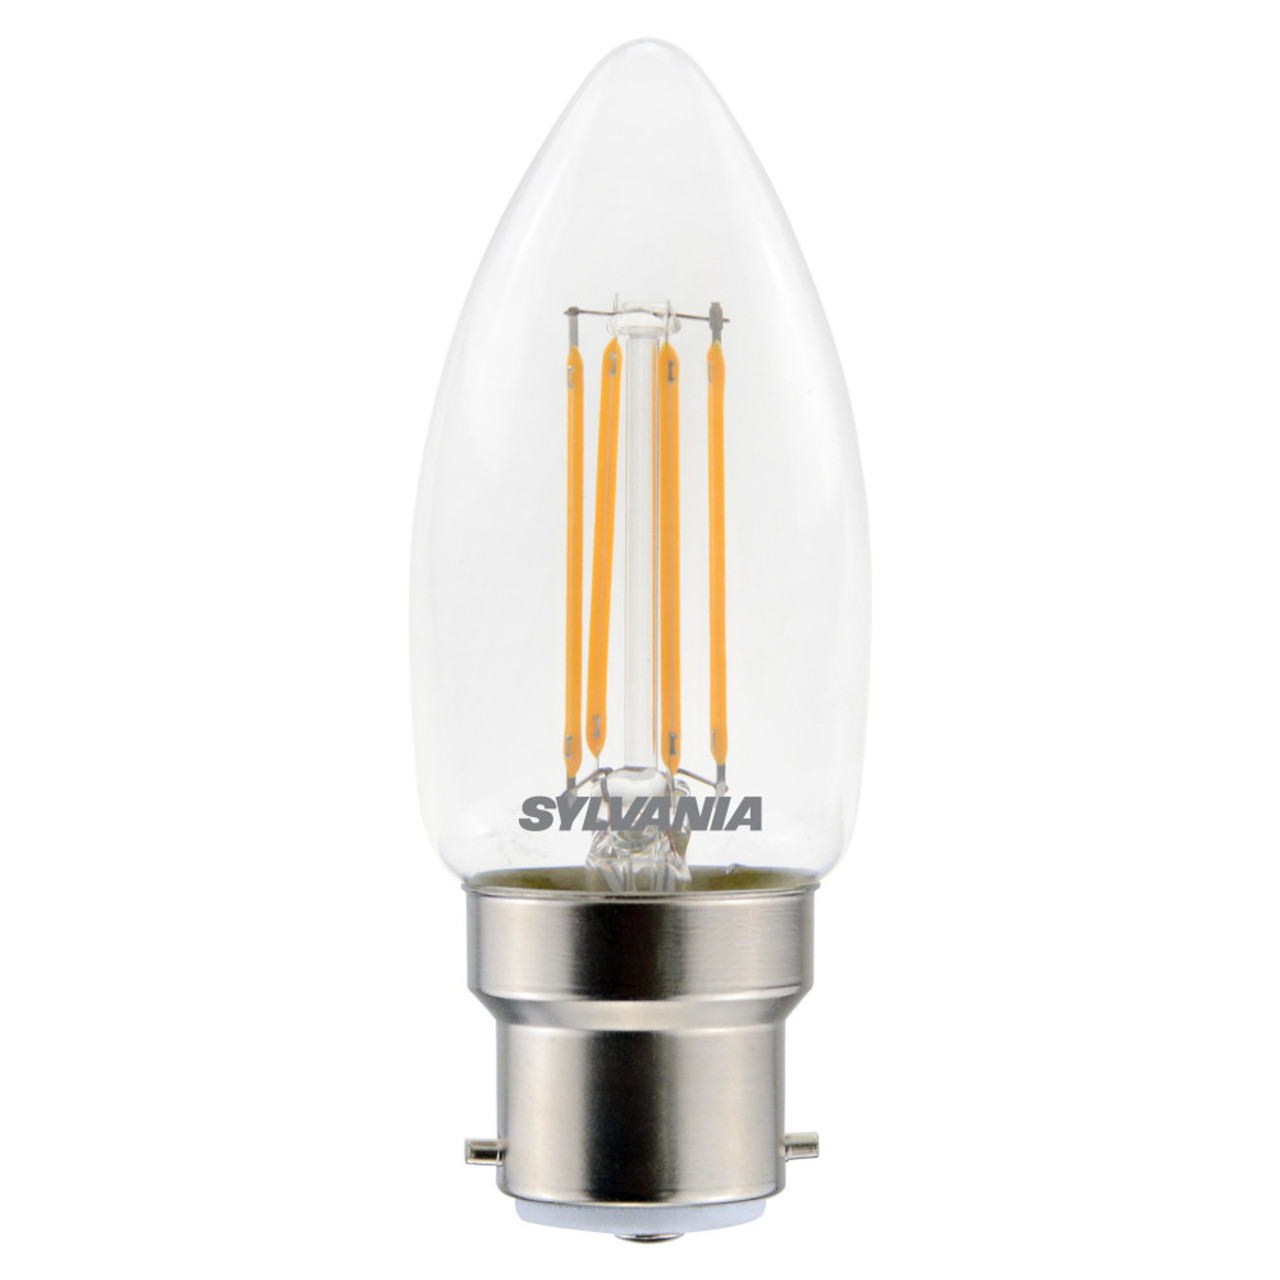 Sylvania Retro LED Candle 4.5W (40W eq.) BC Clear Very Warm White